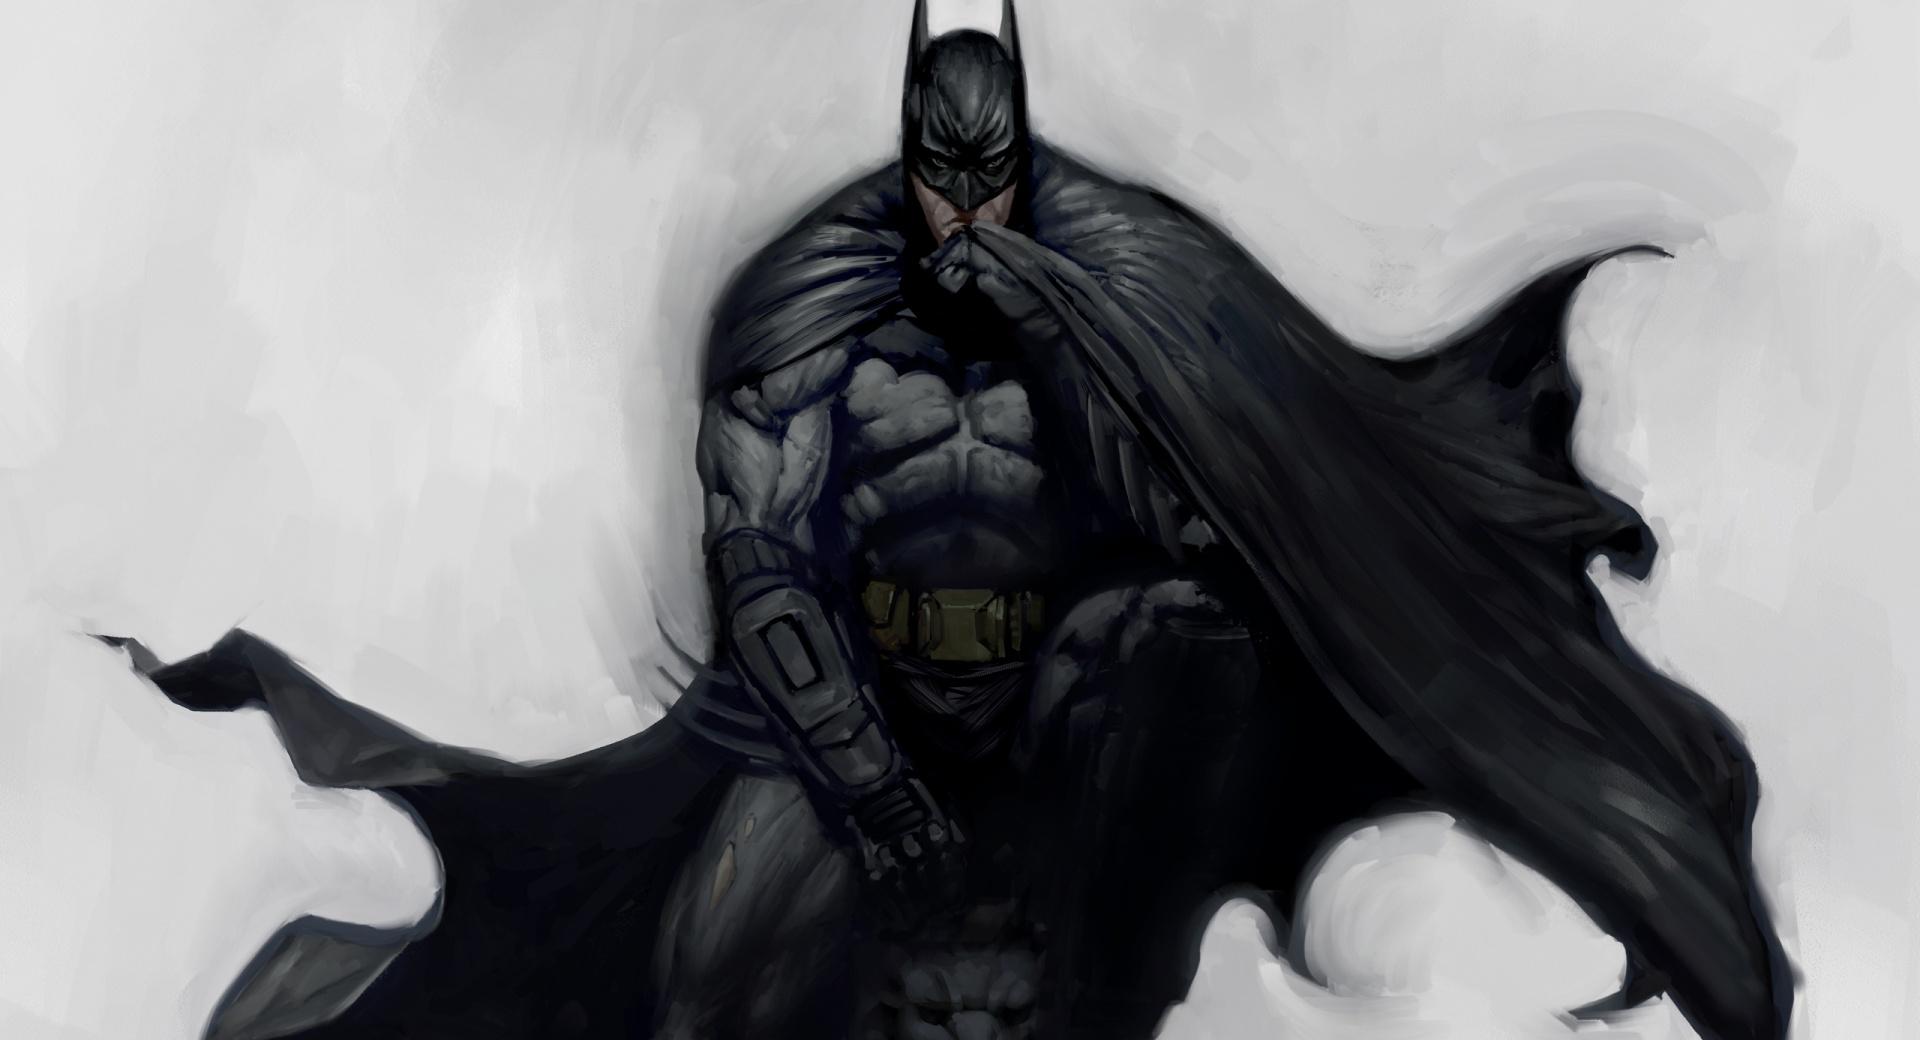 Batman Arkham City Artwork at 2048 x 2048 iPad size wallpapers HD quality